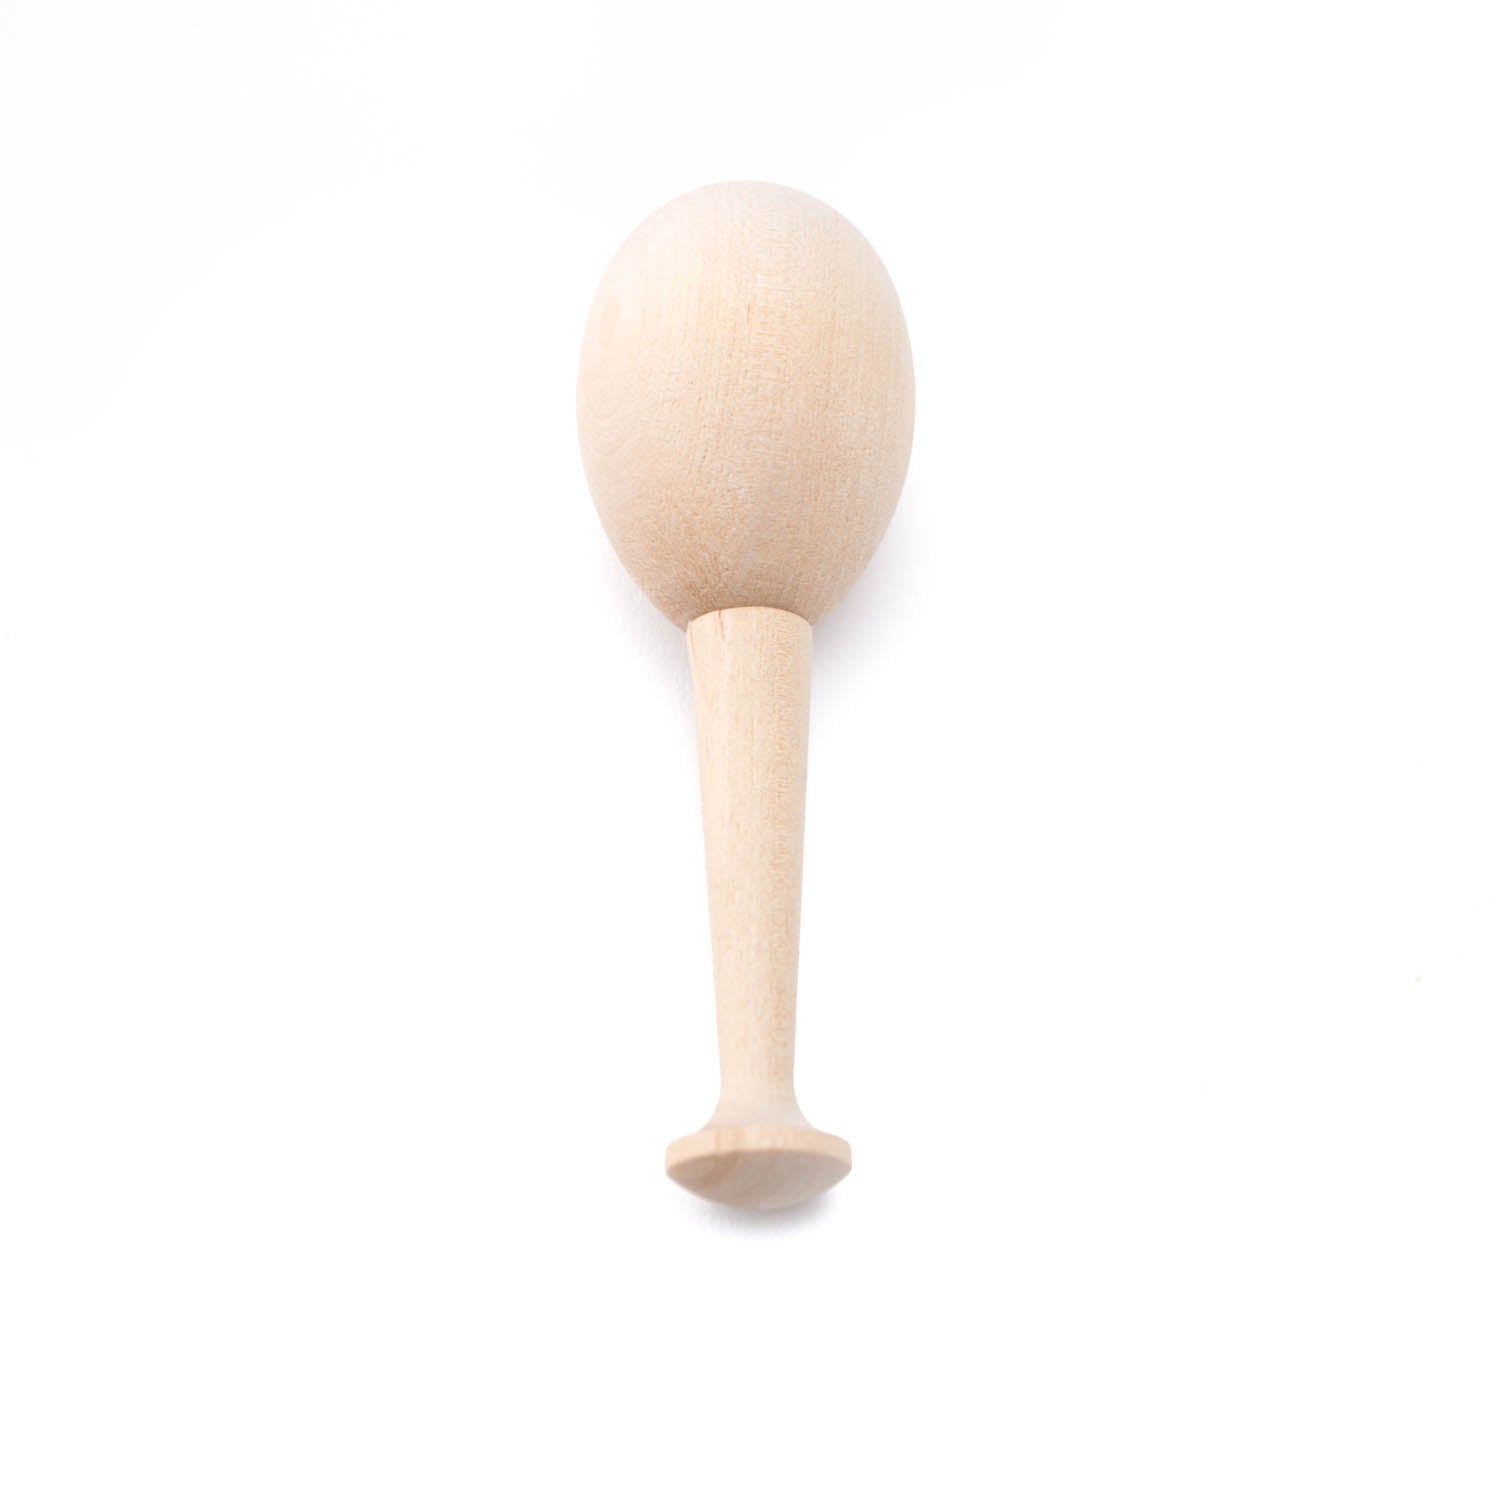 A KirbyAllison.com darning egg used for mending socks on a white background.